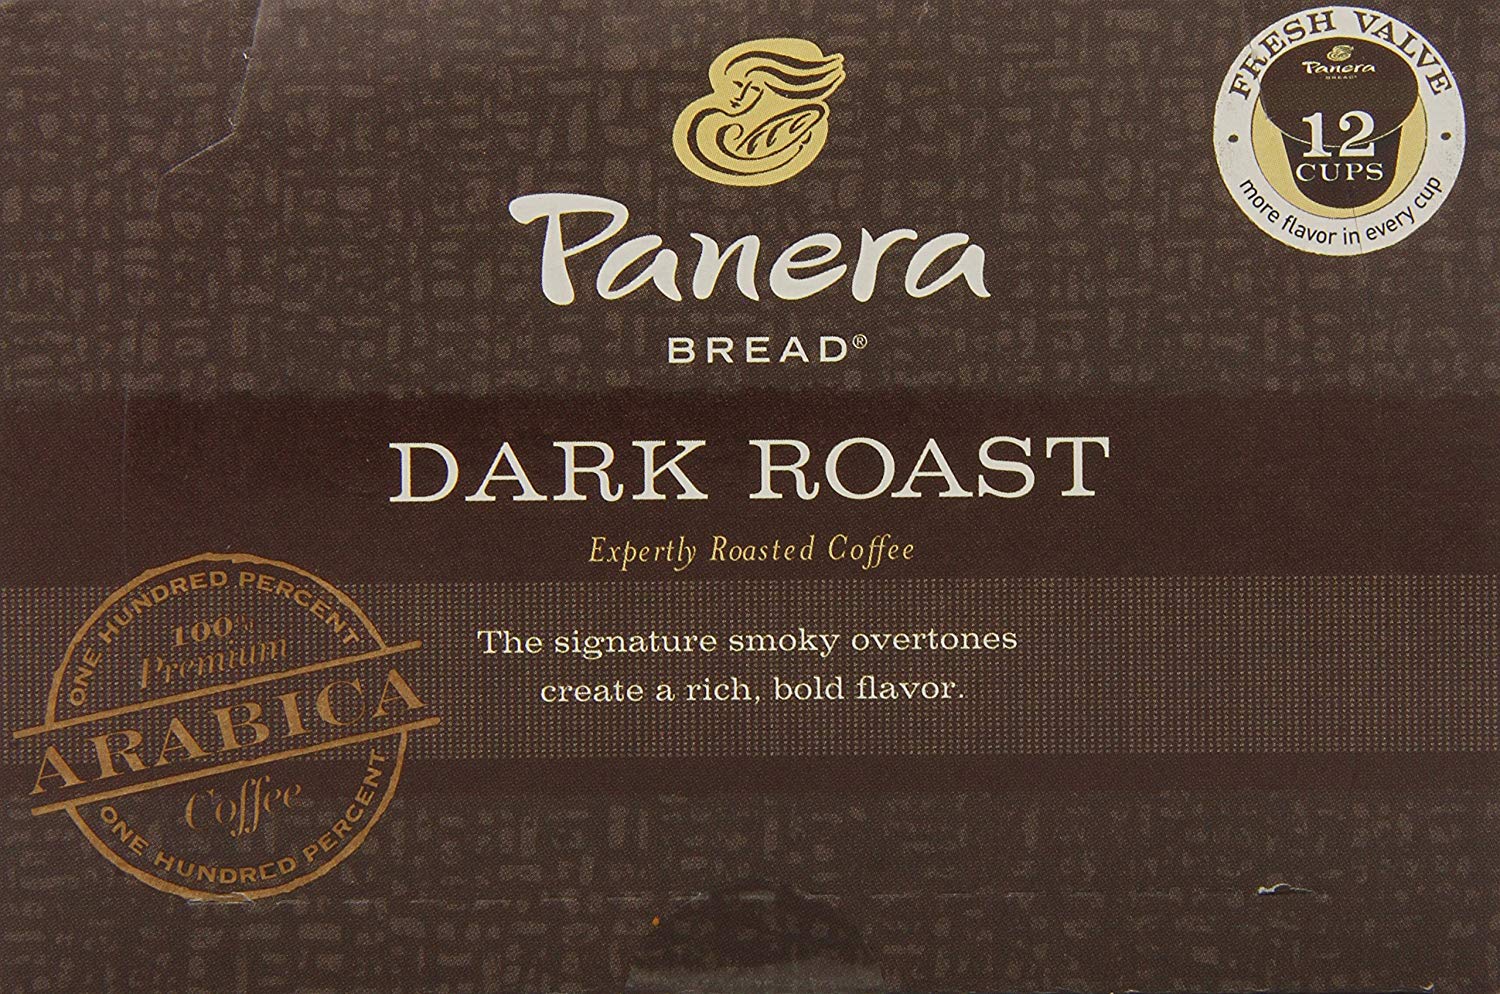 Dark Roast Coffee Brands Logo - Amazon.com : Panera Bread Coffee, Dark Roast, 12 Count : Grocery ...